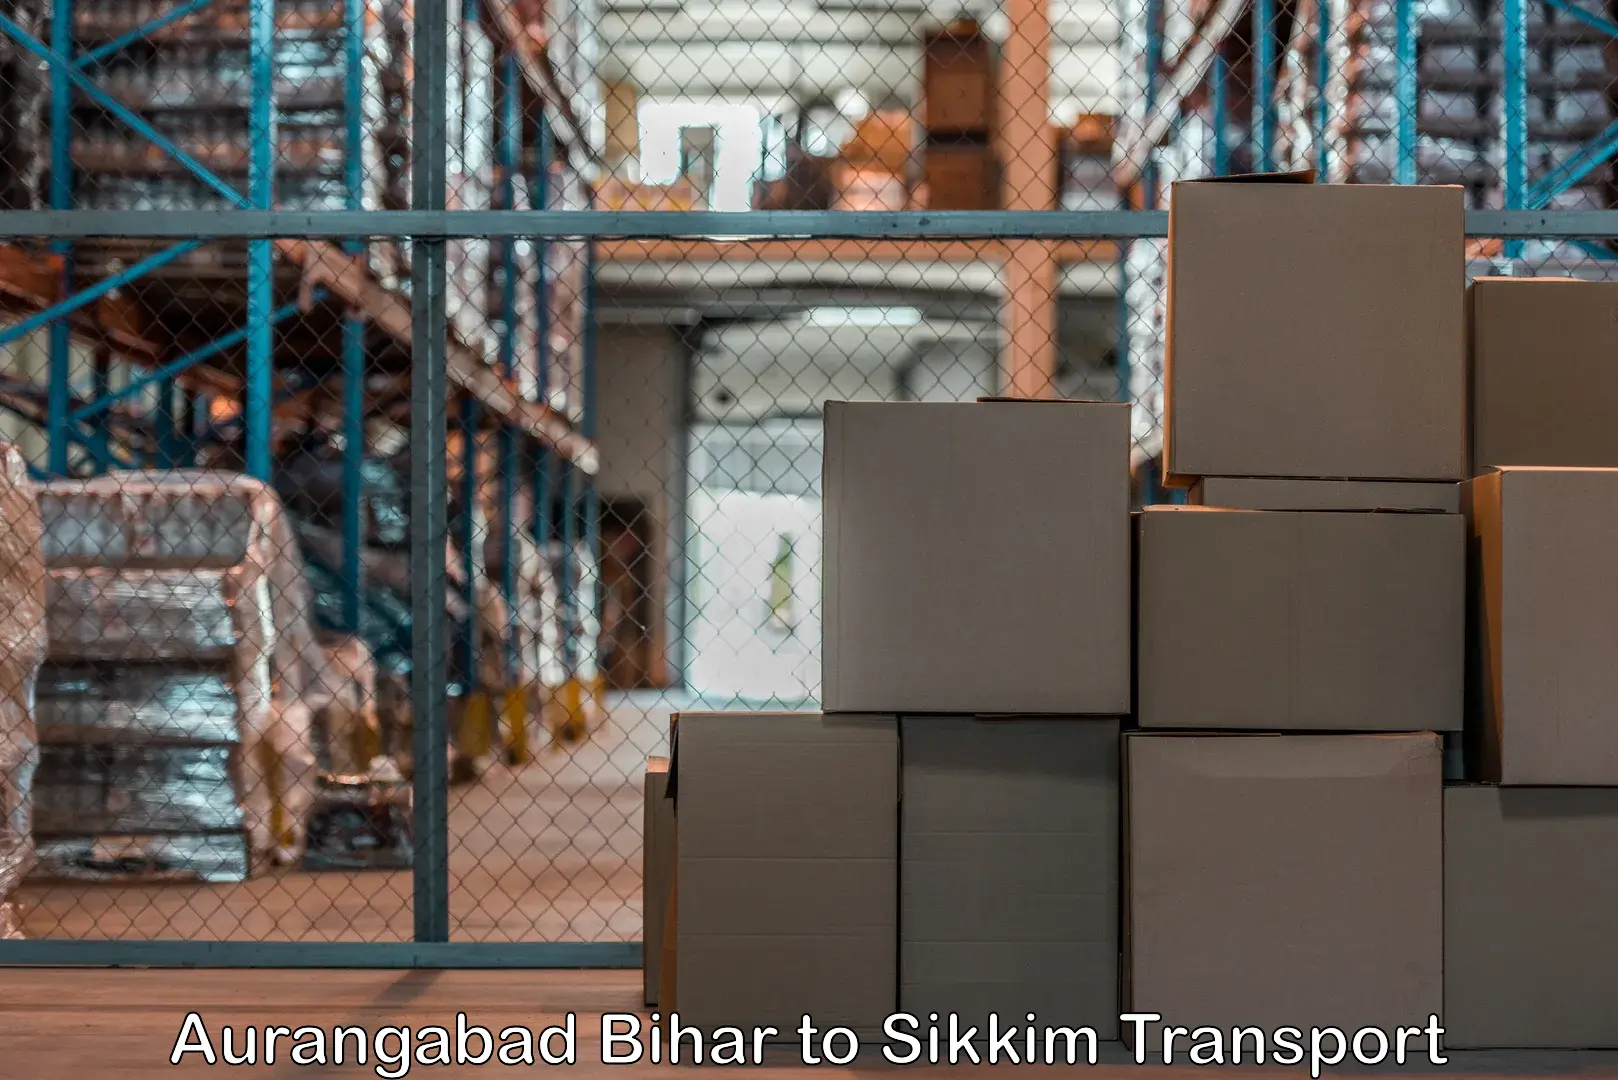 Transport in sharing Aurangabad Bihar to Geyzing